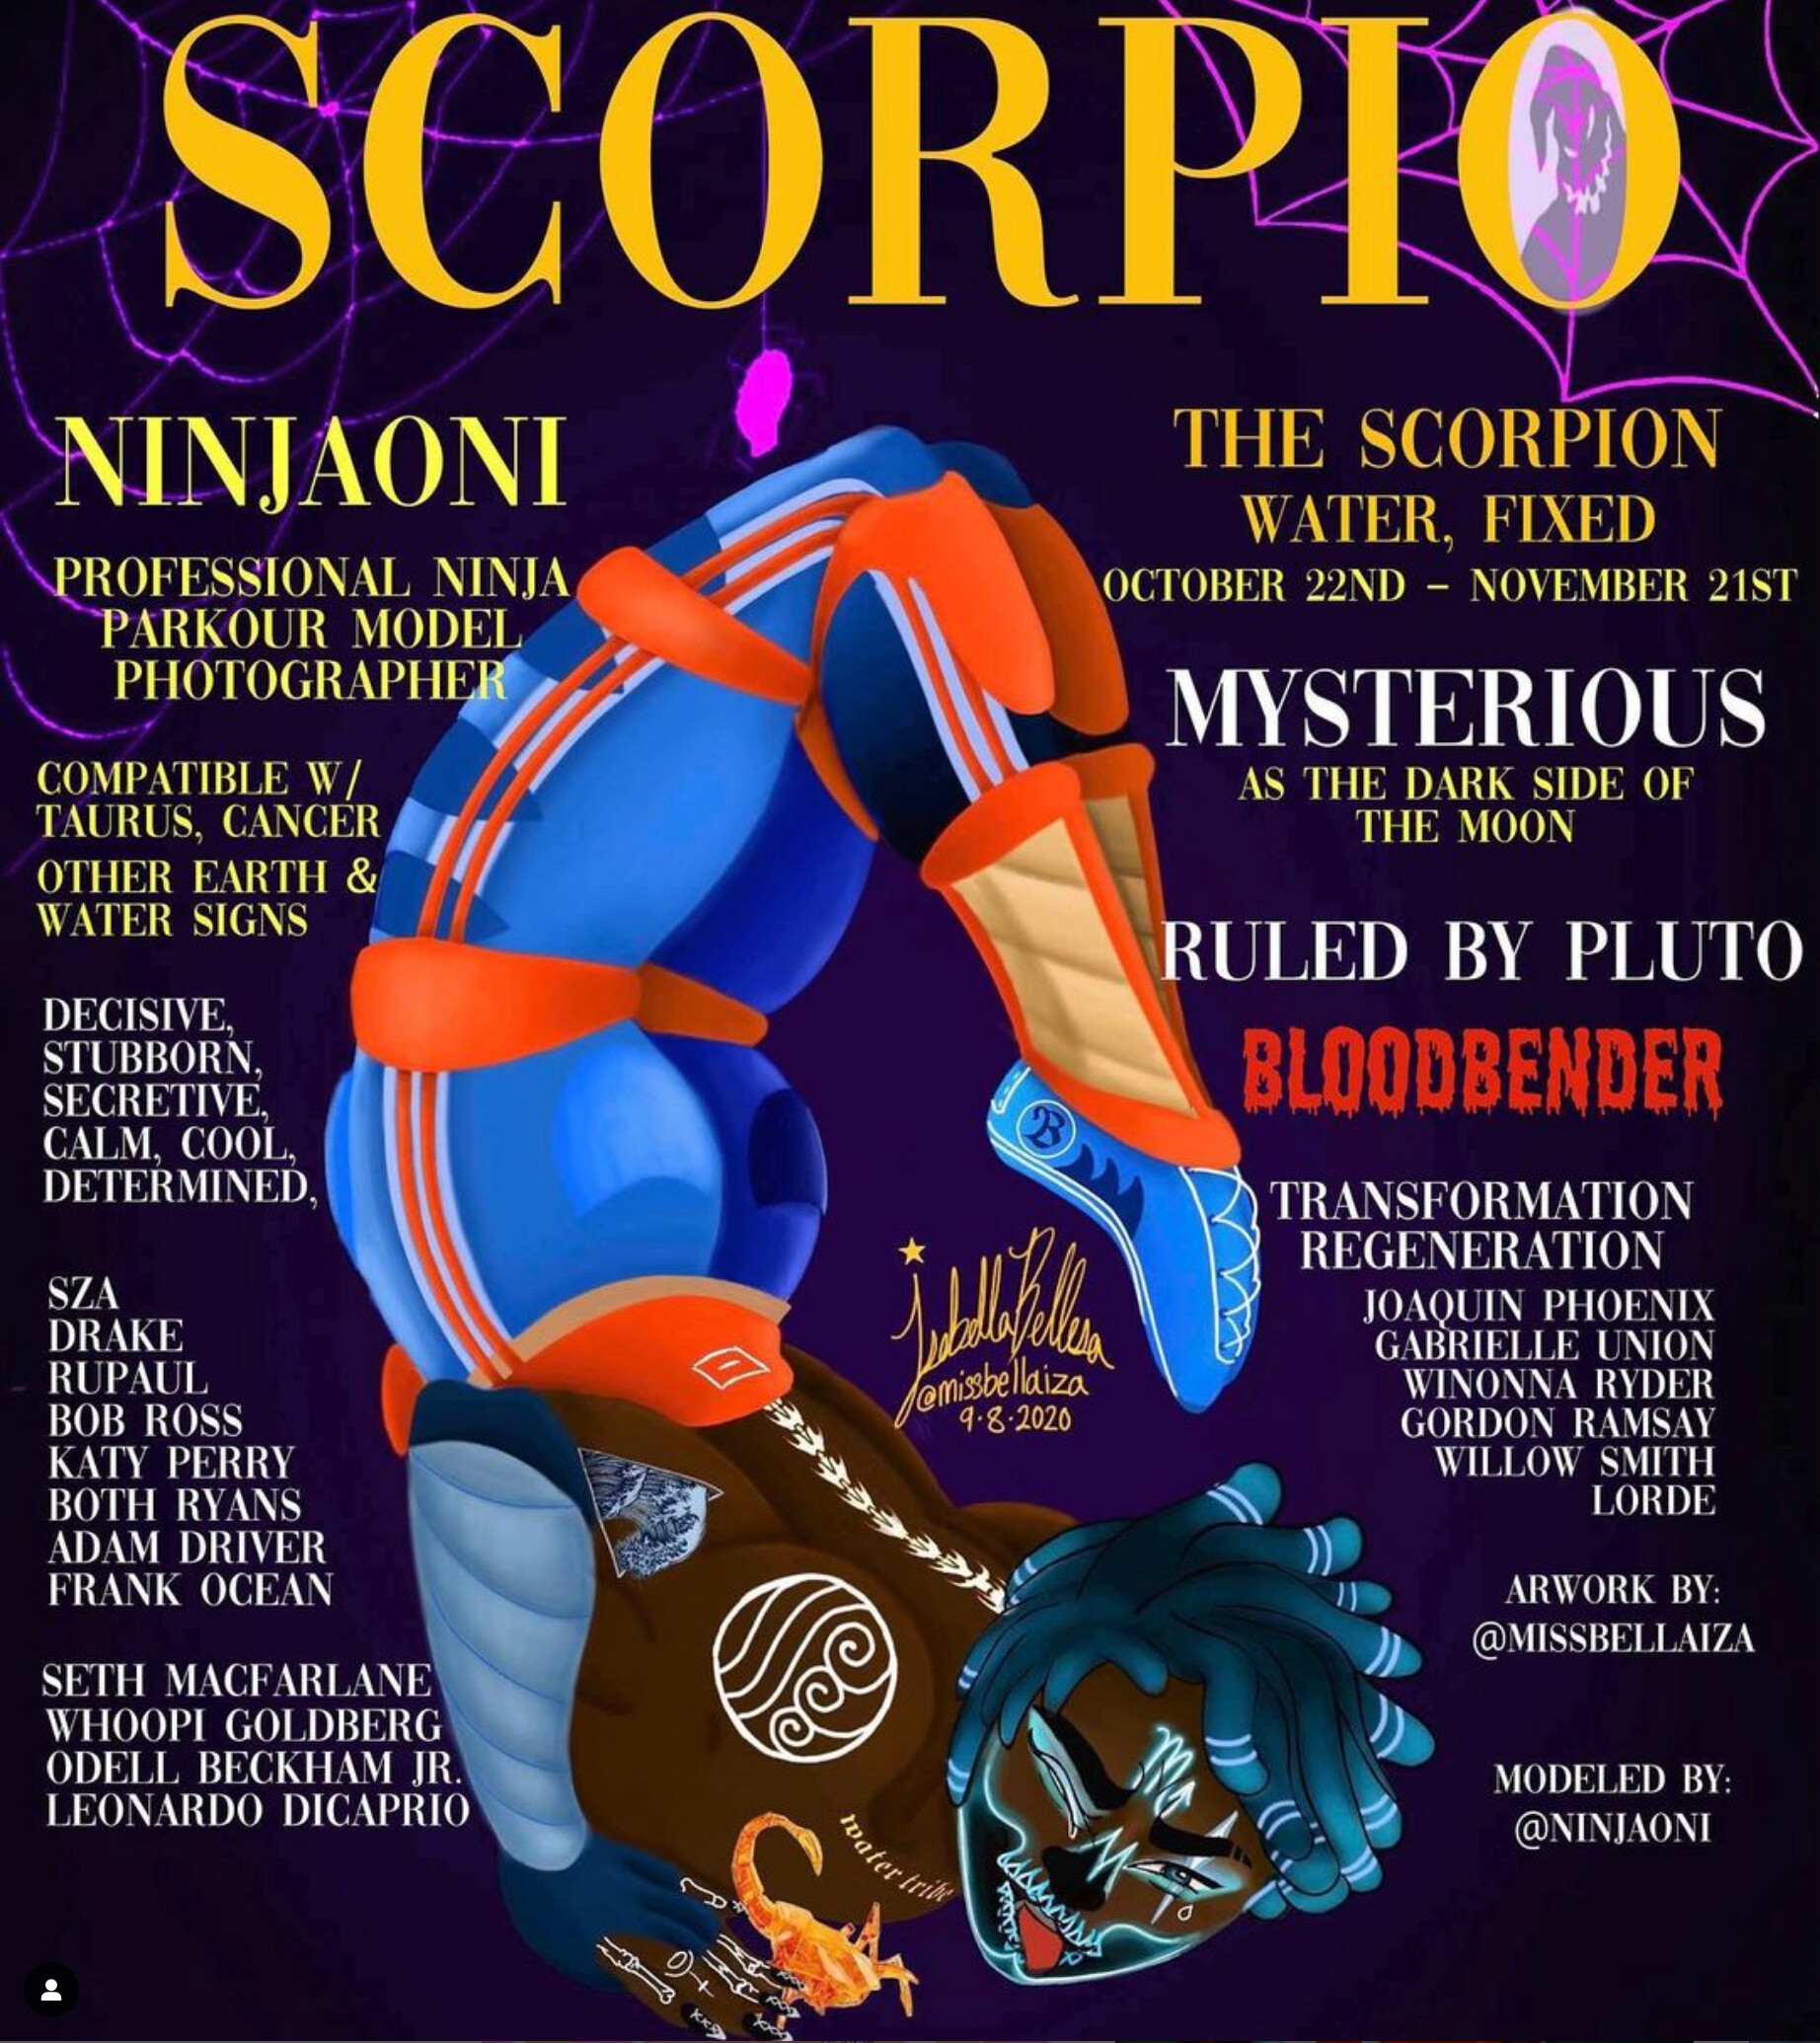 ArtStation - Scorpio Vogue, missbellaiza, Digital Illustration, 2020